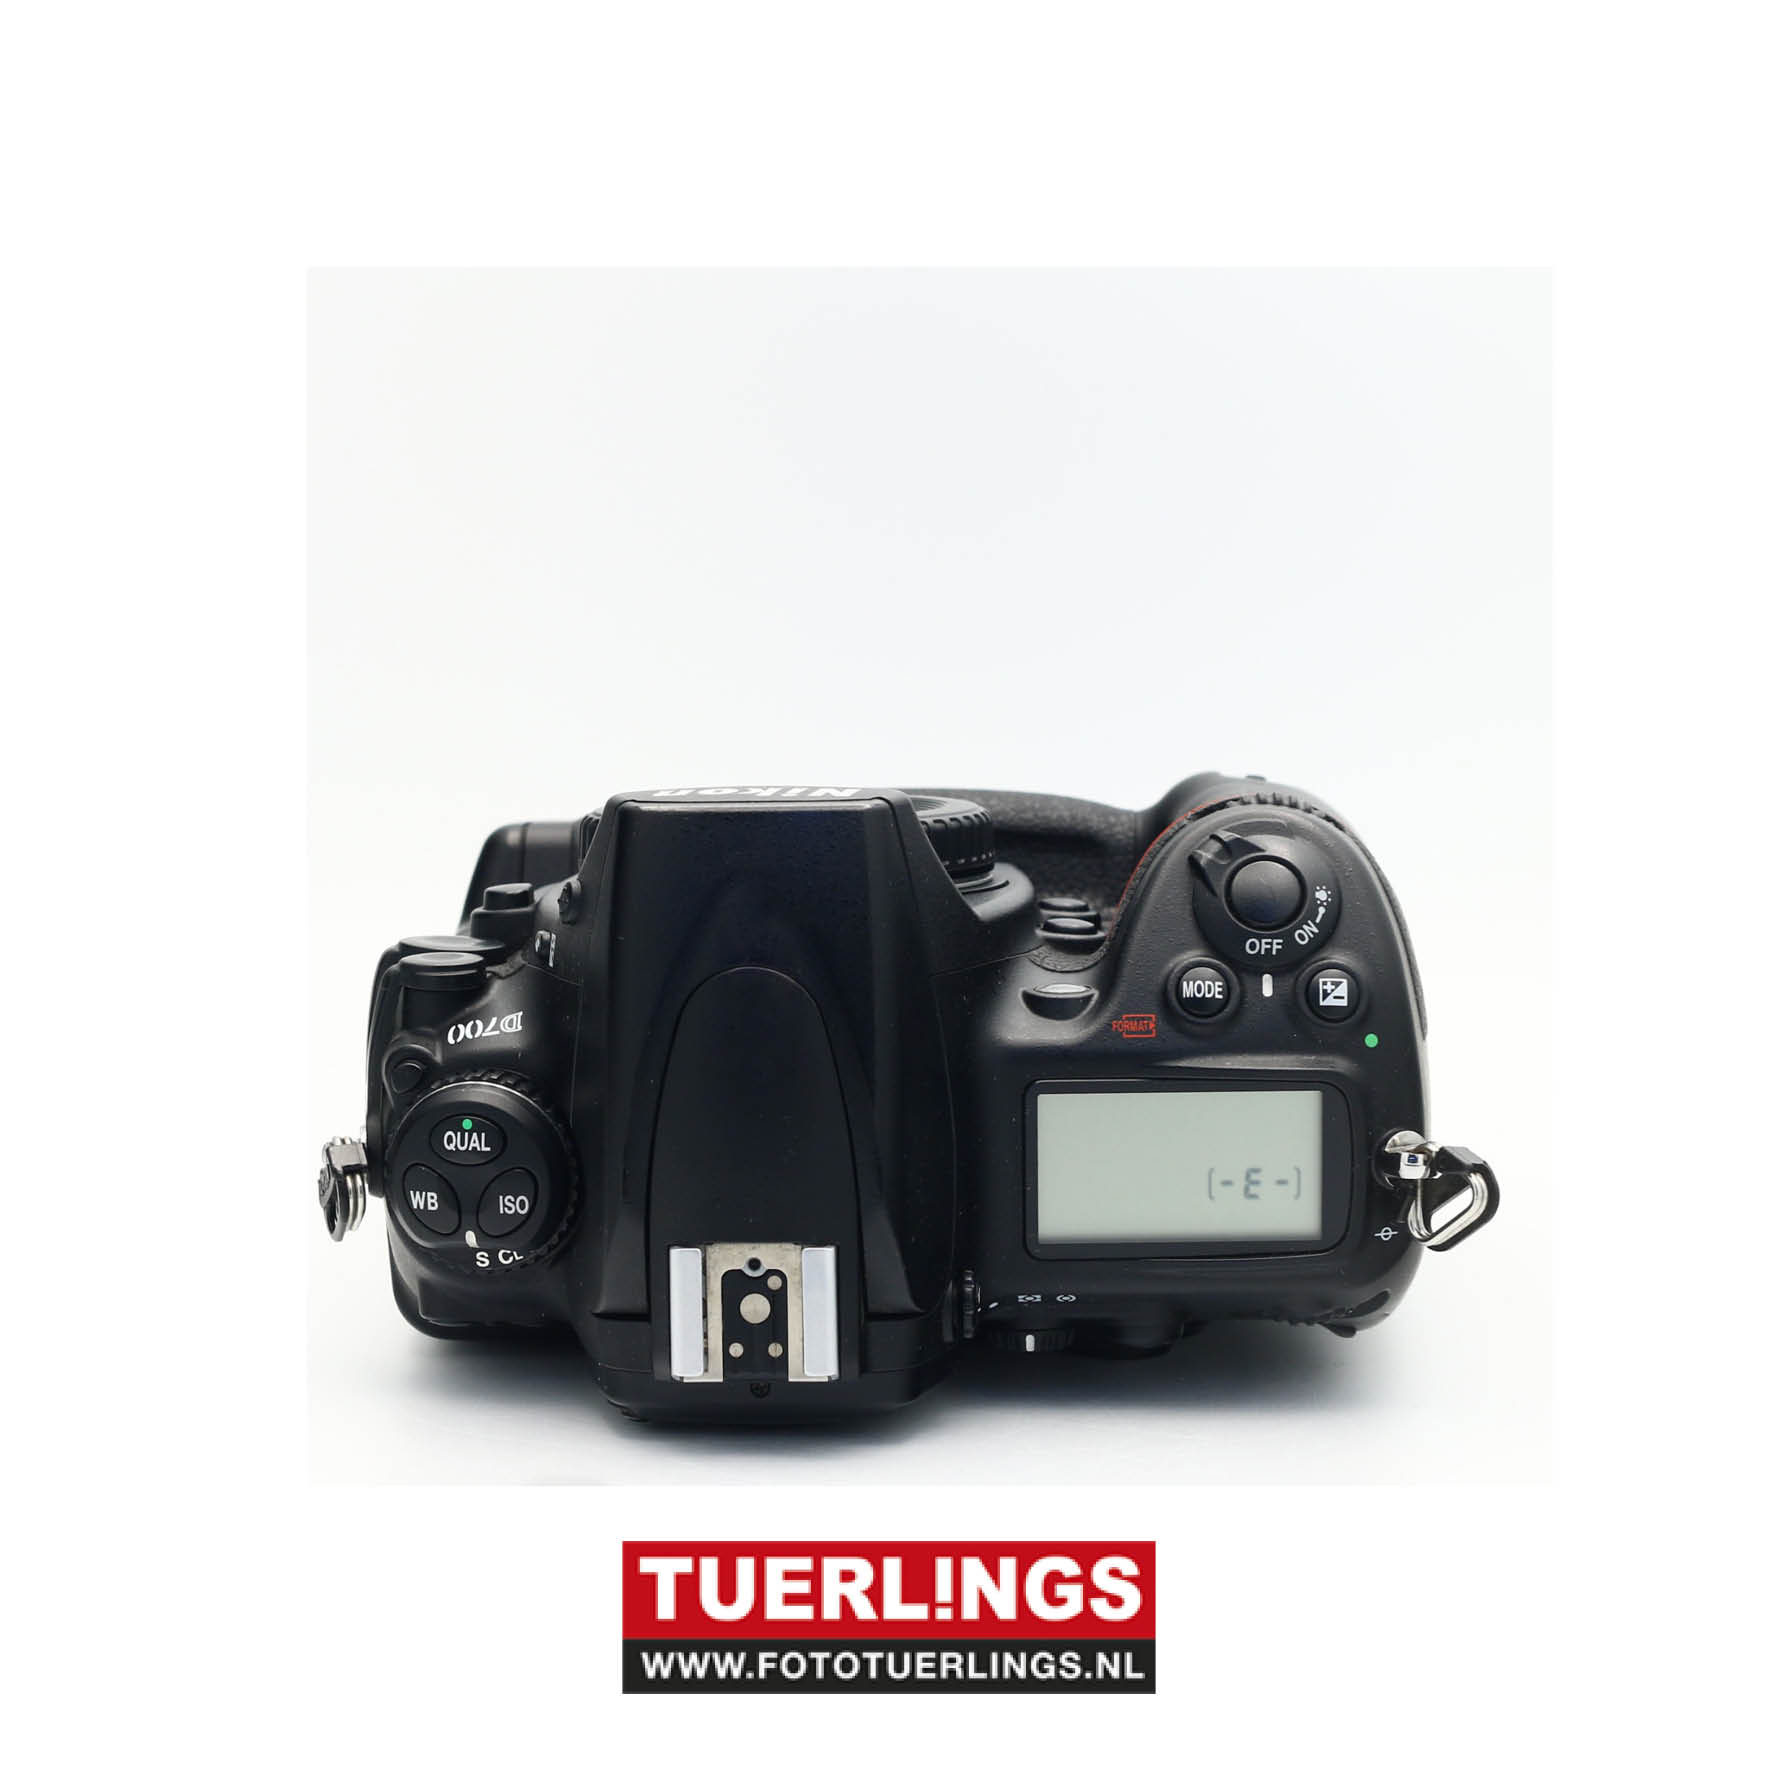 Bemiddelaar Grof klimaat Nikon D700 Digitale Spiegelreflex Camera Full-frame + MB-D10 Grip occasion  - Foto Tuerlings